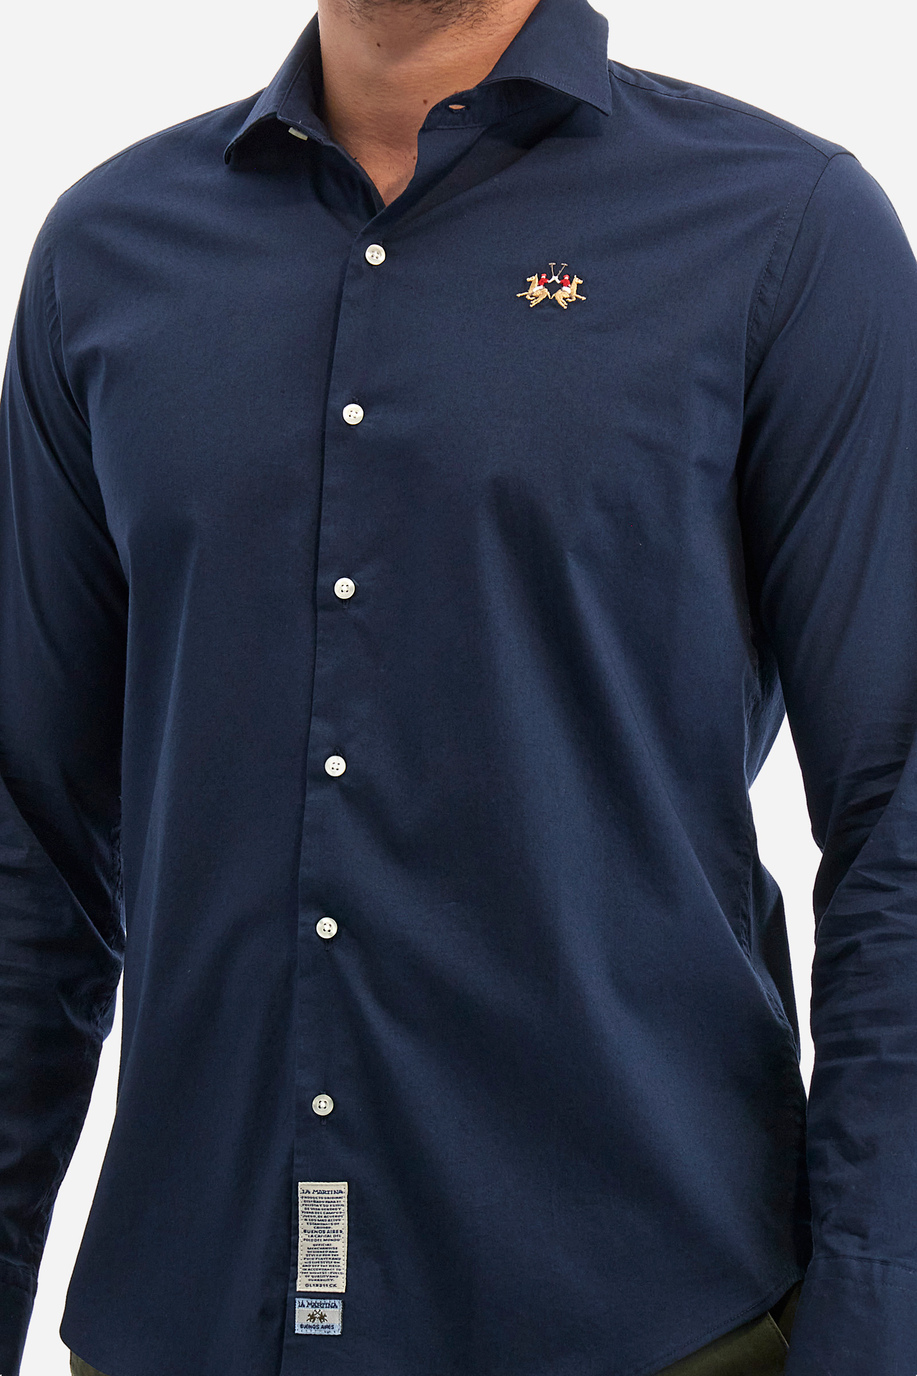 Men’s slim fit shirt small logo - Innocent - XLarge sizes | La Martina - Official Online Shop